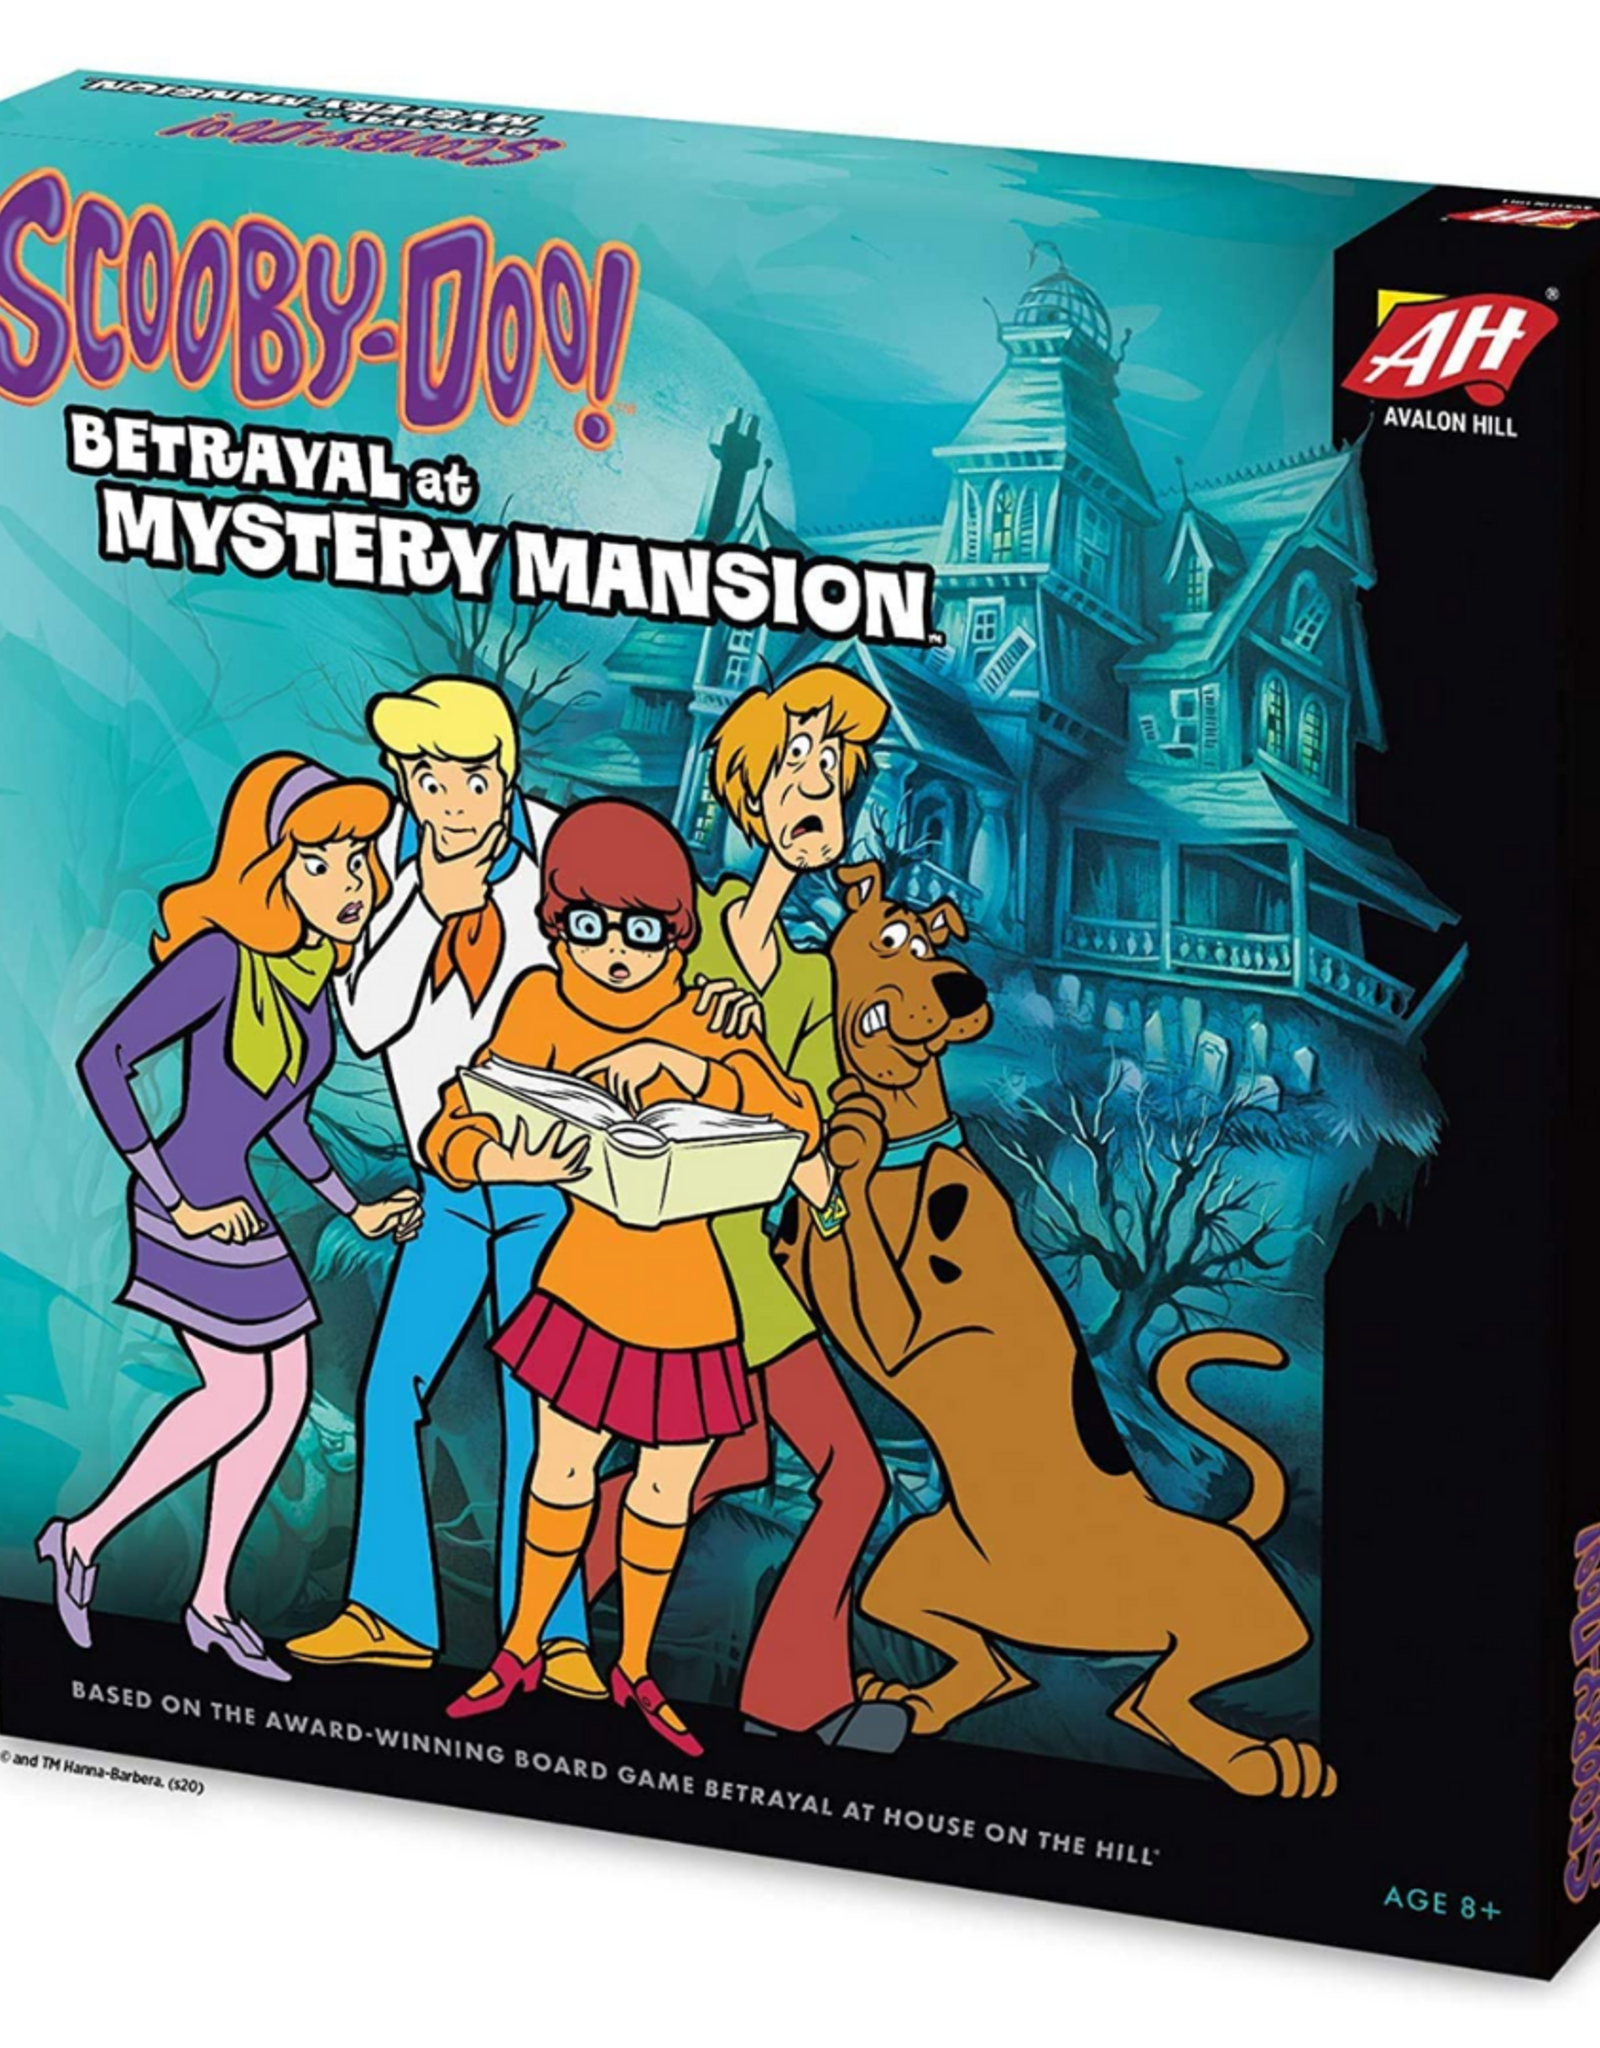 Scooby-Doo! Betrayal at Mystery Mansion